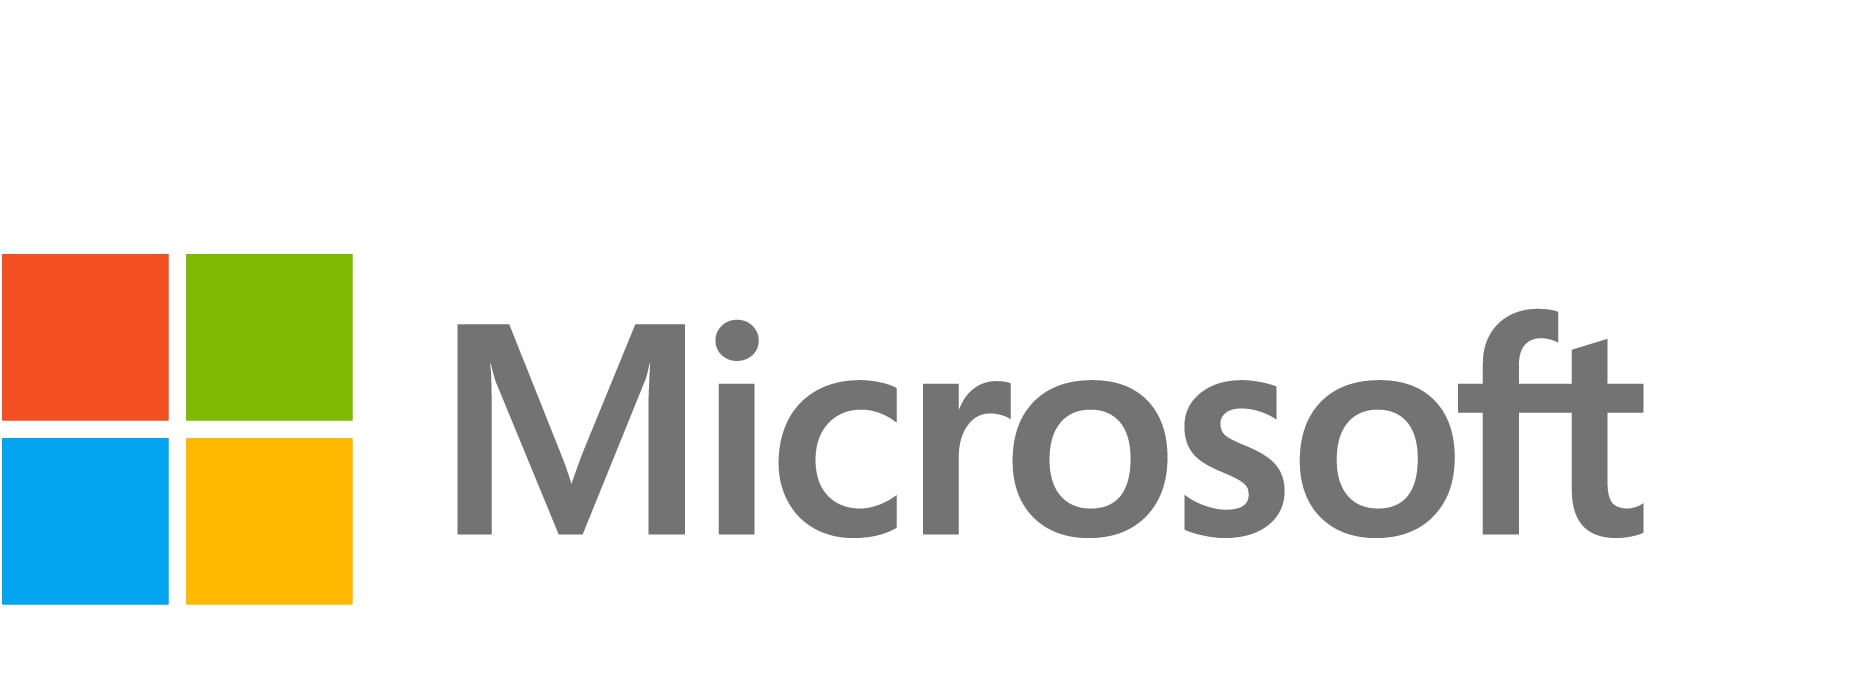 Microsoft Virtual Desktop Access - subscription license (1 month) - 1 user